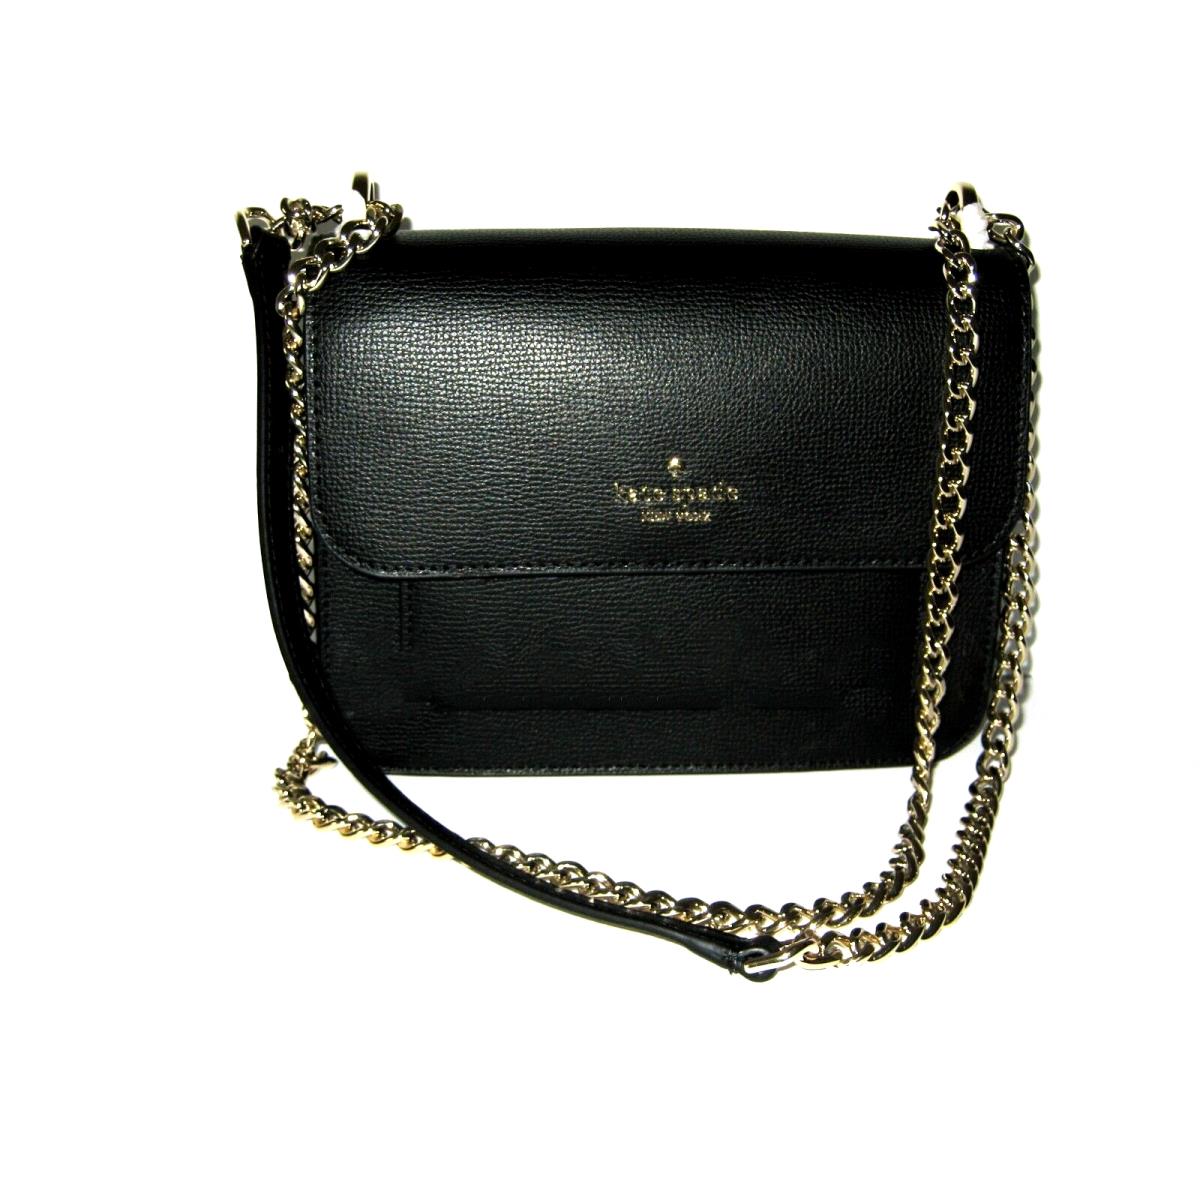 Kate Spade Flap Chain Leather Crossbody Bag K8518 Black New